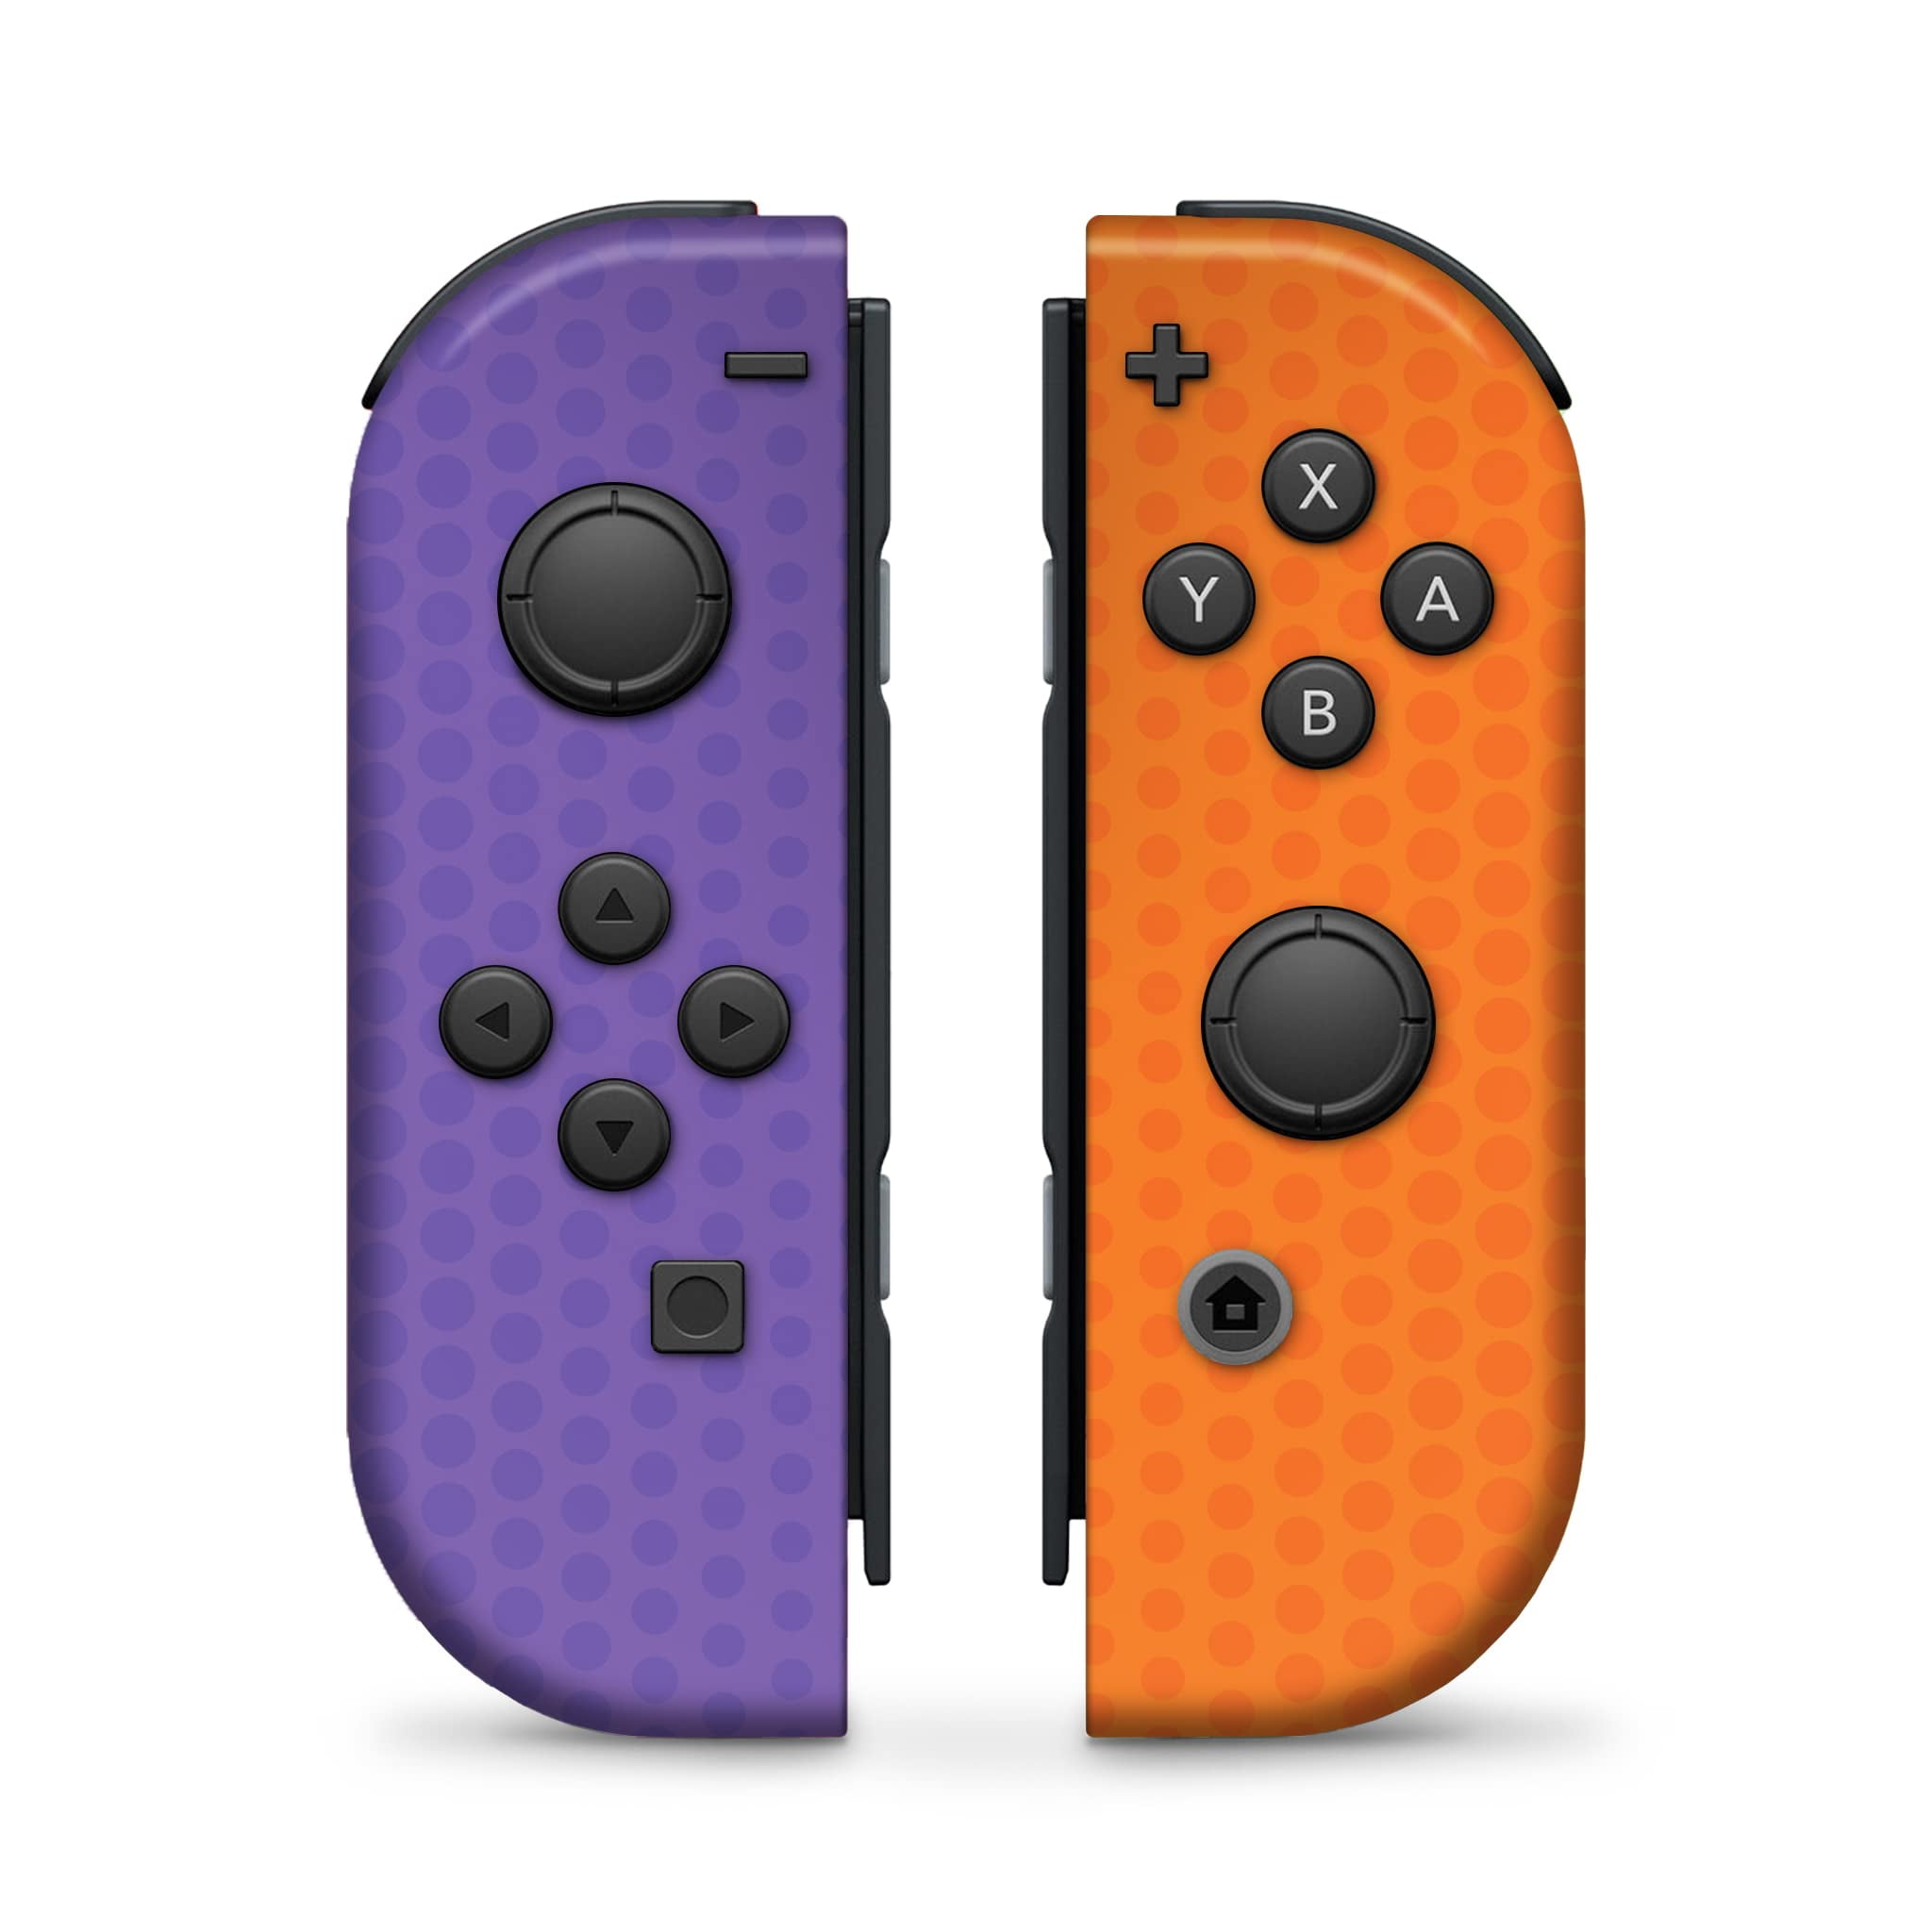 New MIX & MATCH Nintendo Switch Custom solid Joy Cons You Choose Colors 